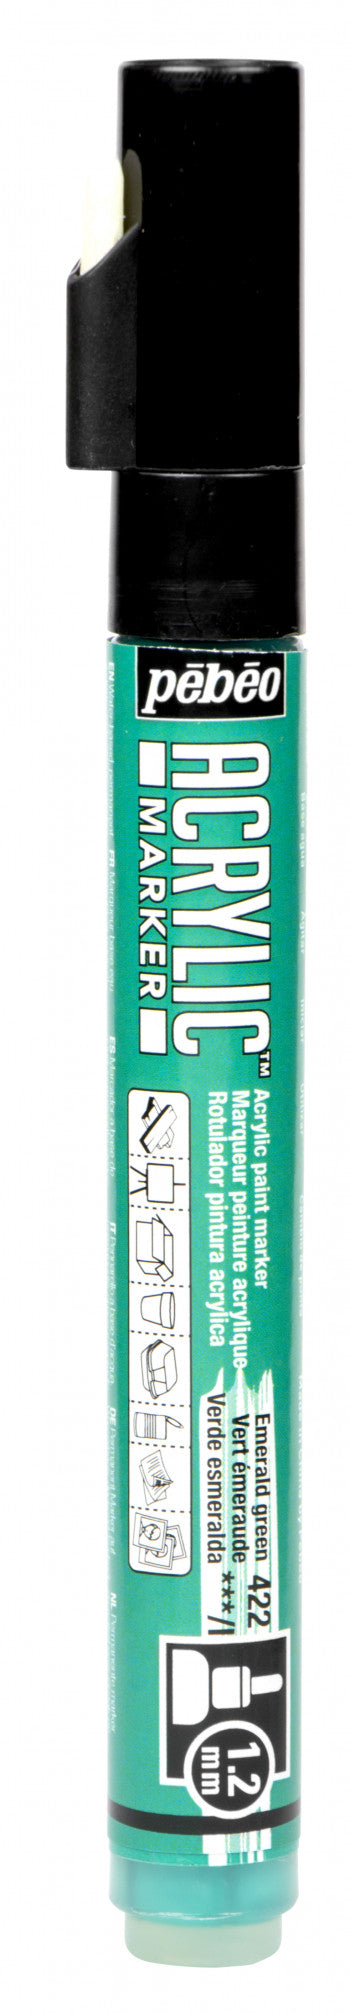 Acrylic Marker 1.2mm Pebeo Emerald green - 422